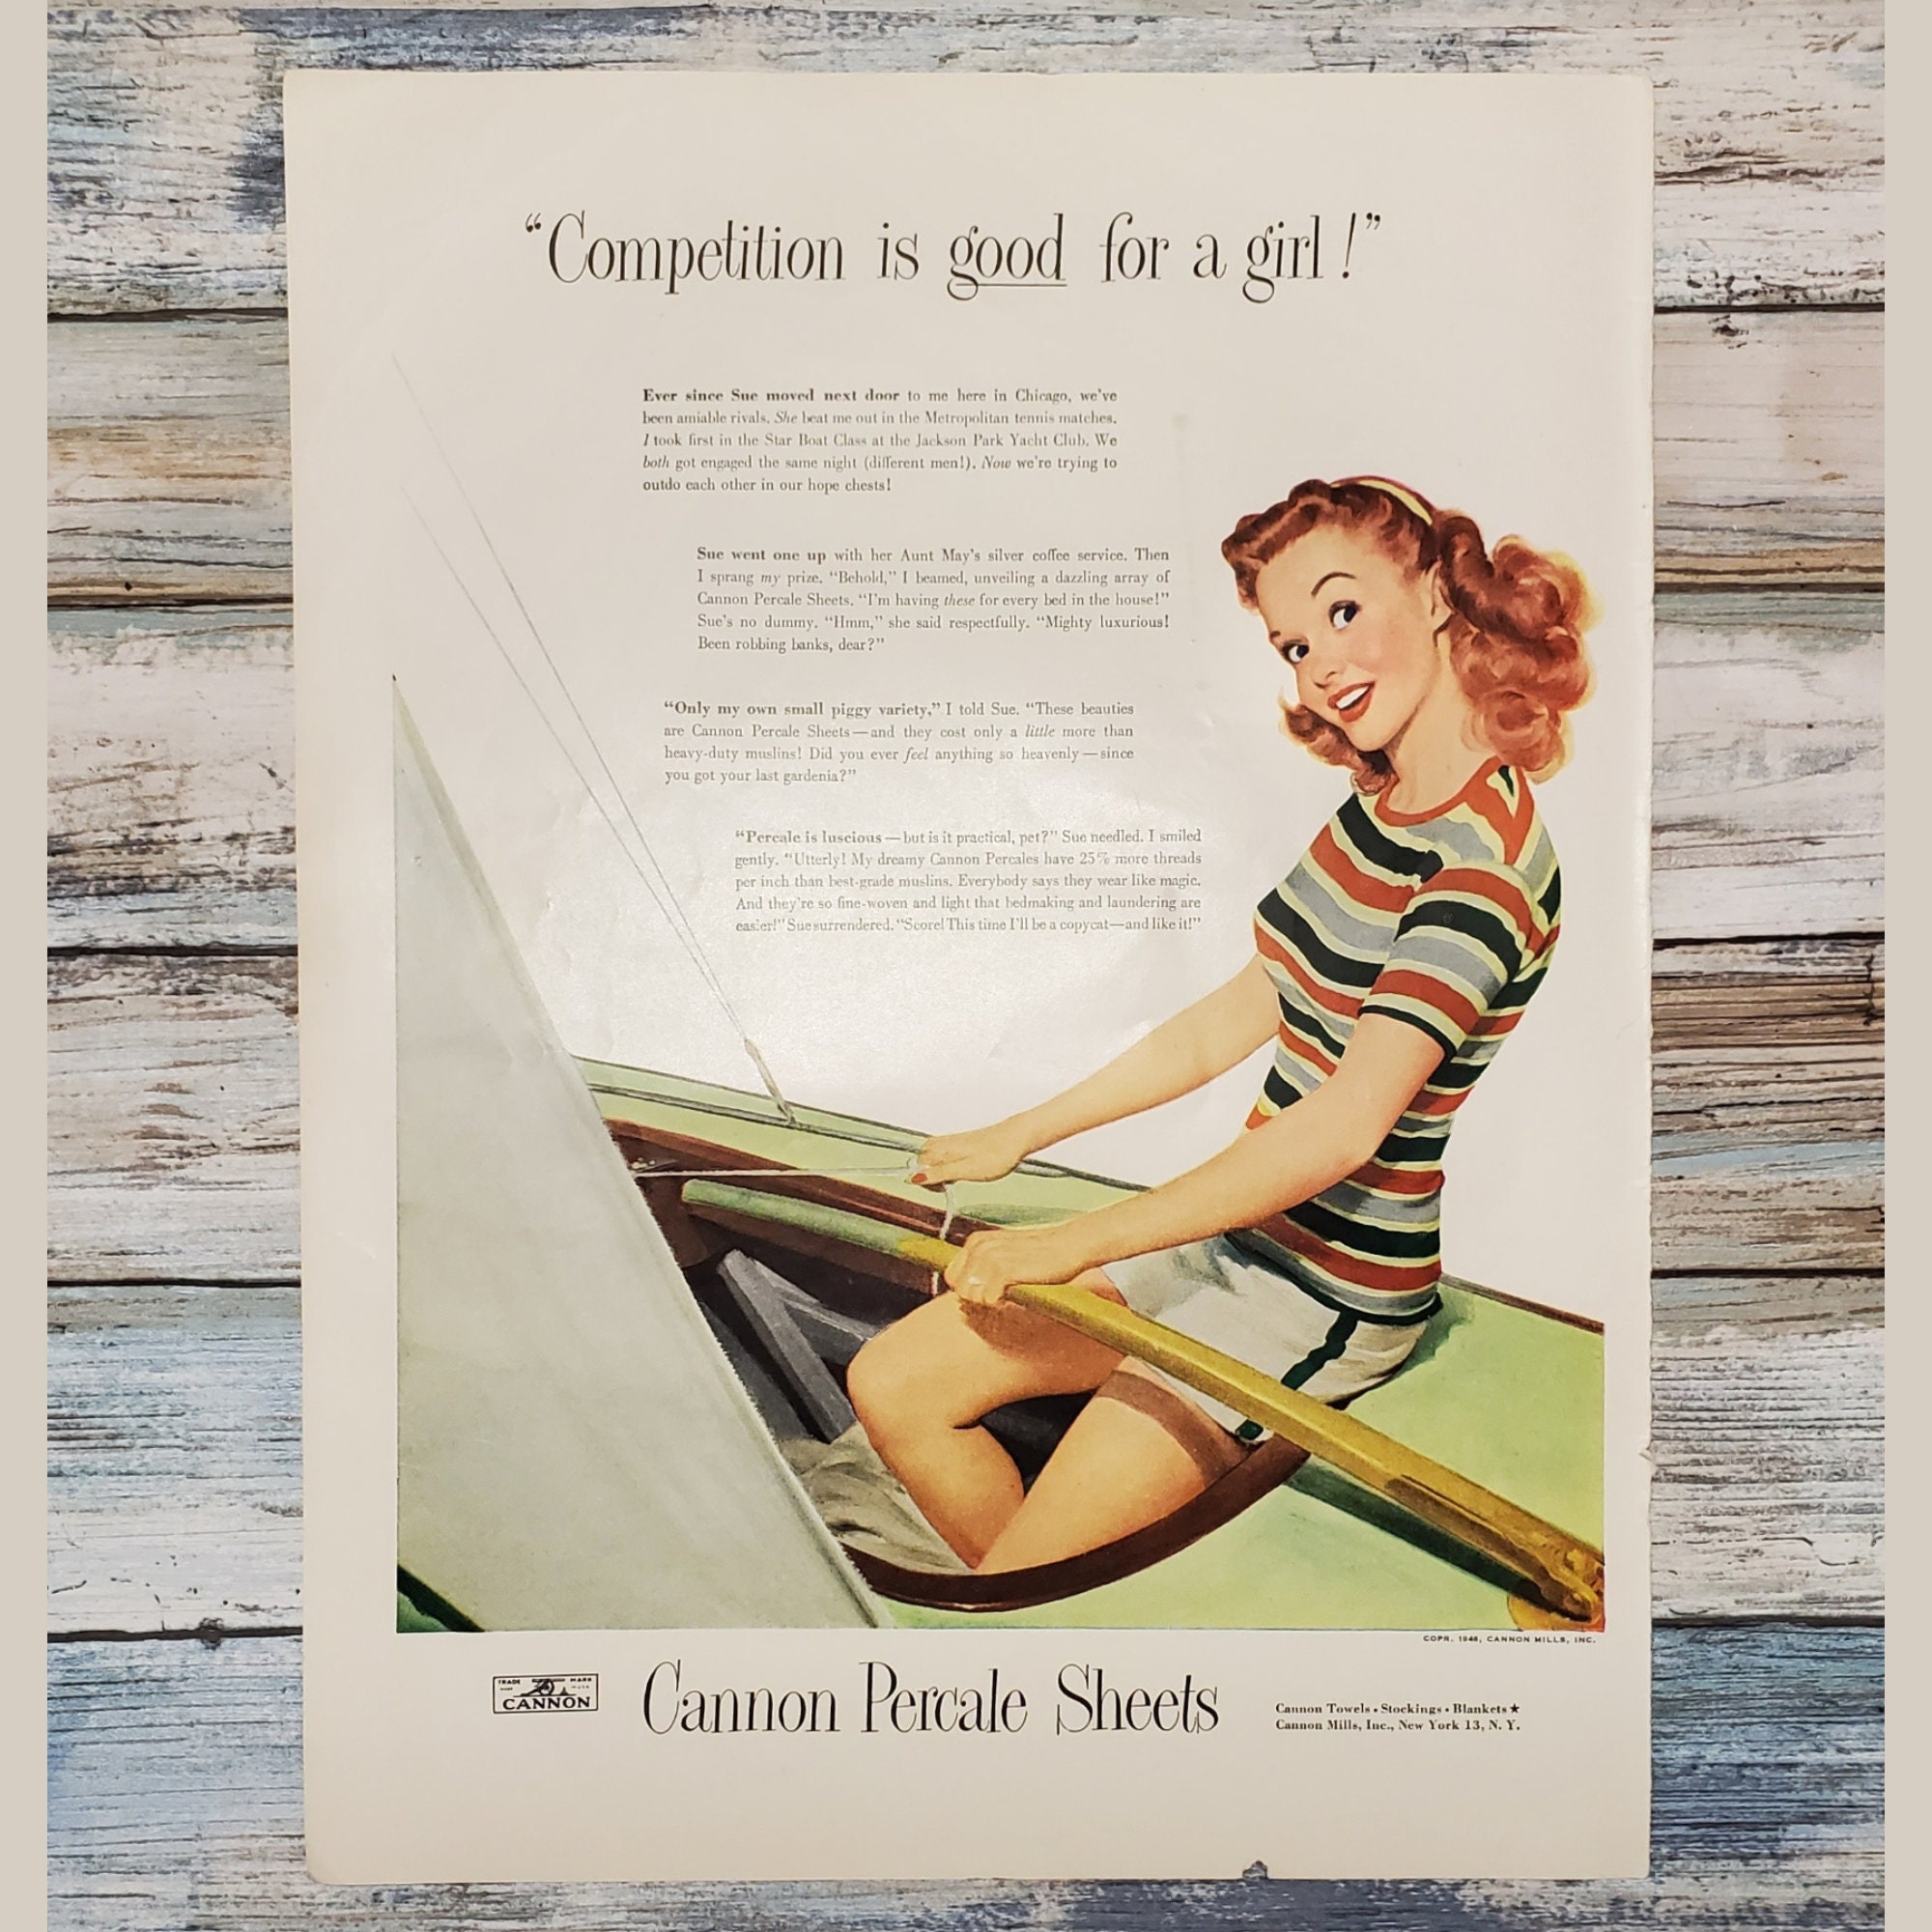 1946 CANNON TOWELS Print Ad Original Vintage Full Color Bath